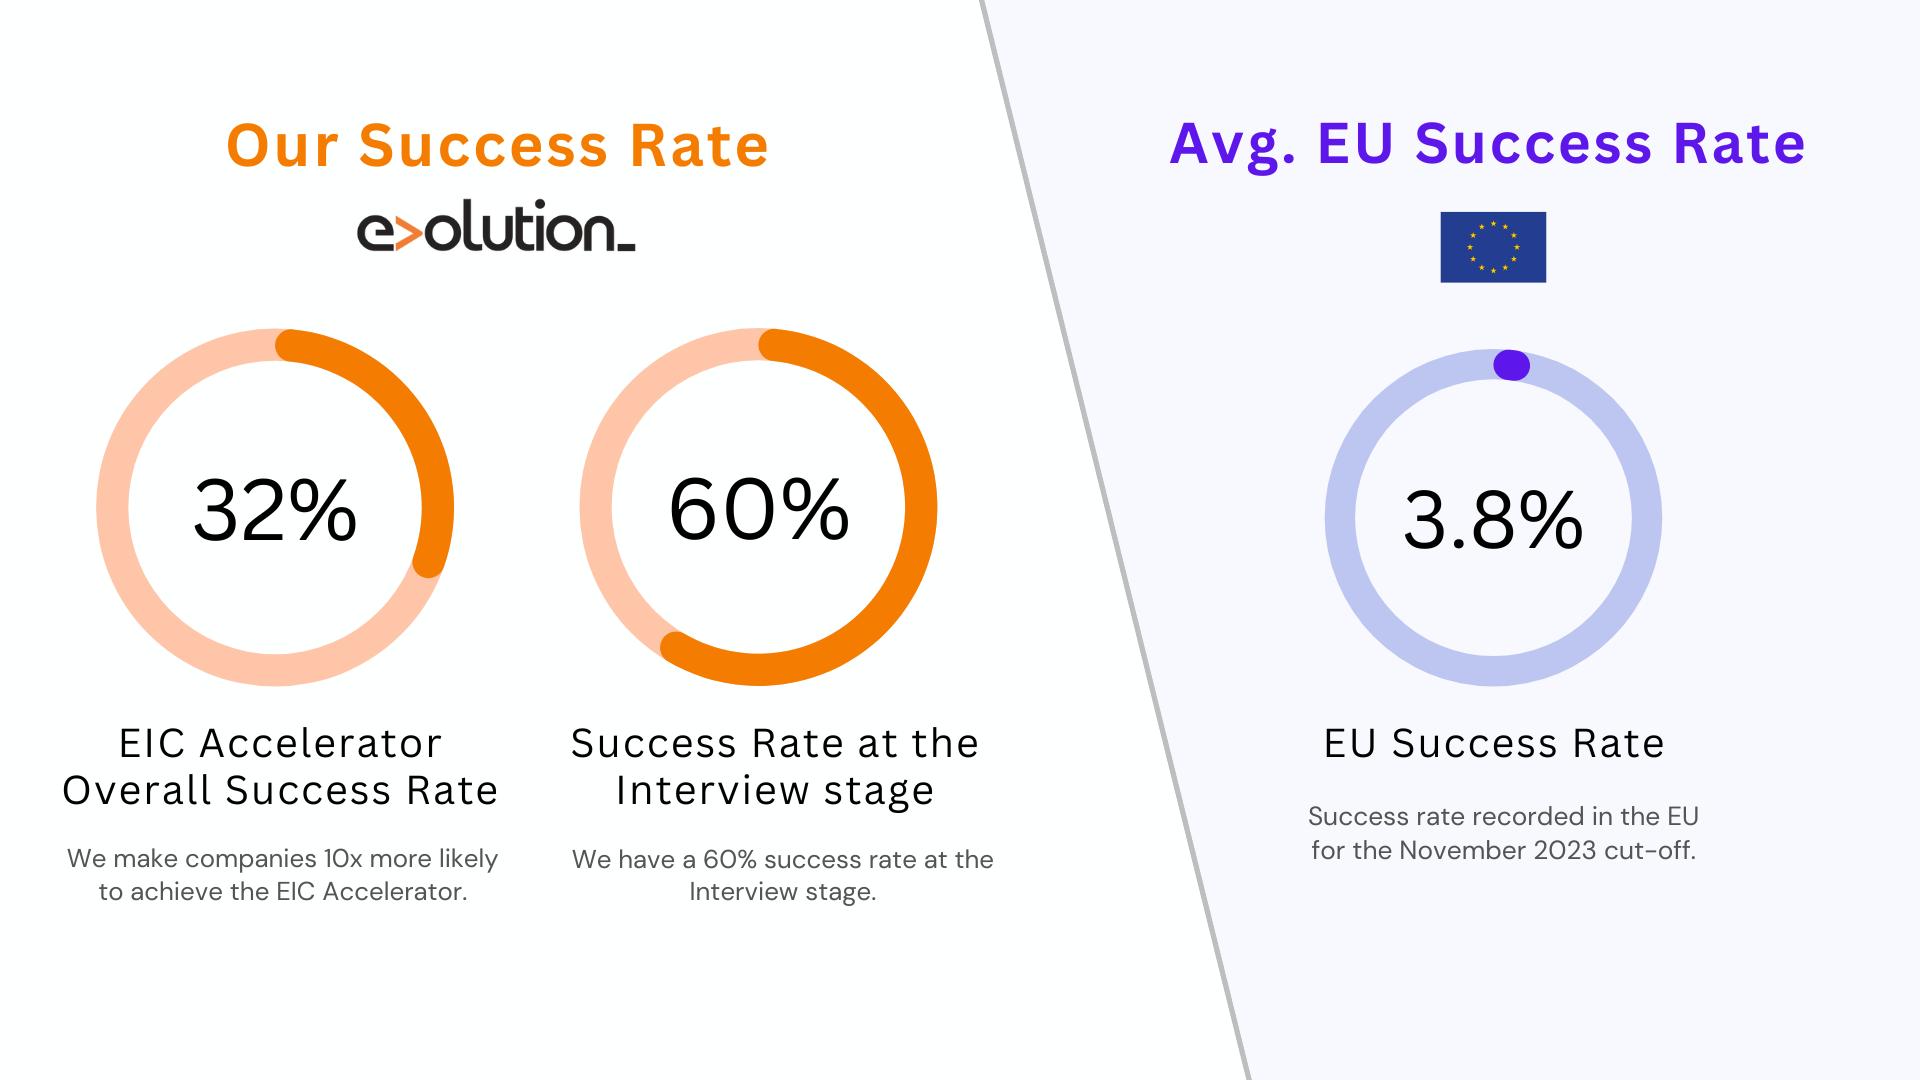 Evolution Europe's Success Rte for the EIC Accelerator programme vs Average EU Success Rate